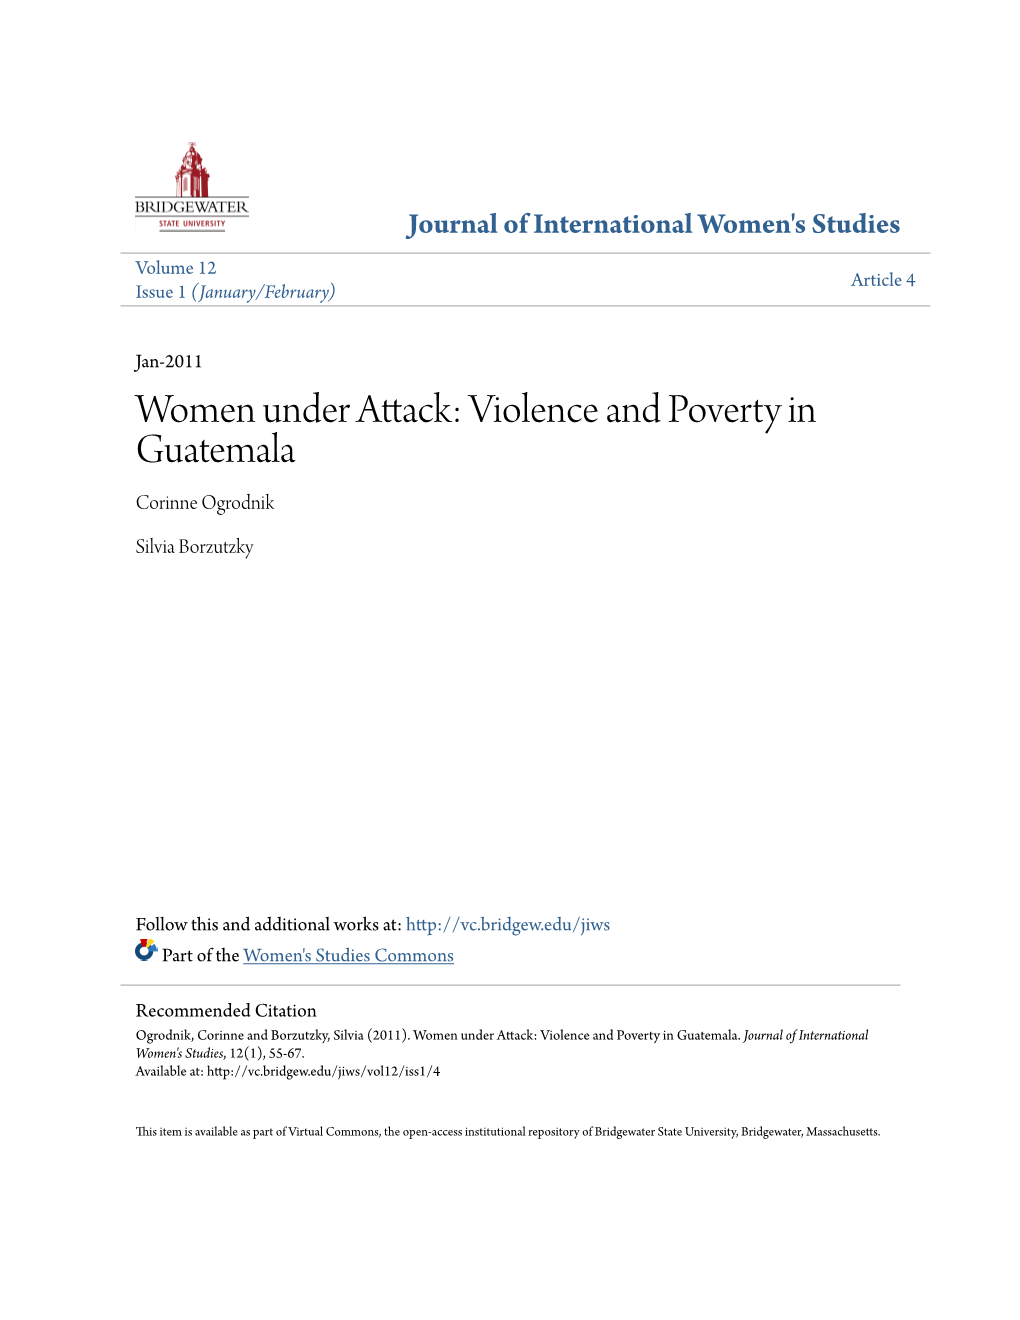 Violence and Poverty in Guatemala Corinne Ogrodnik